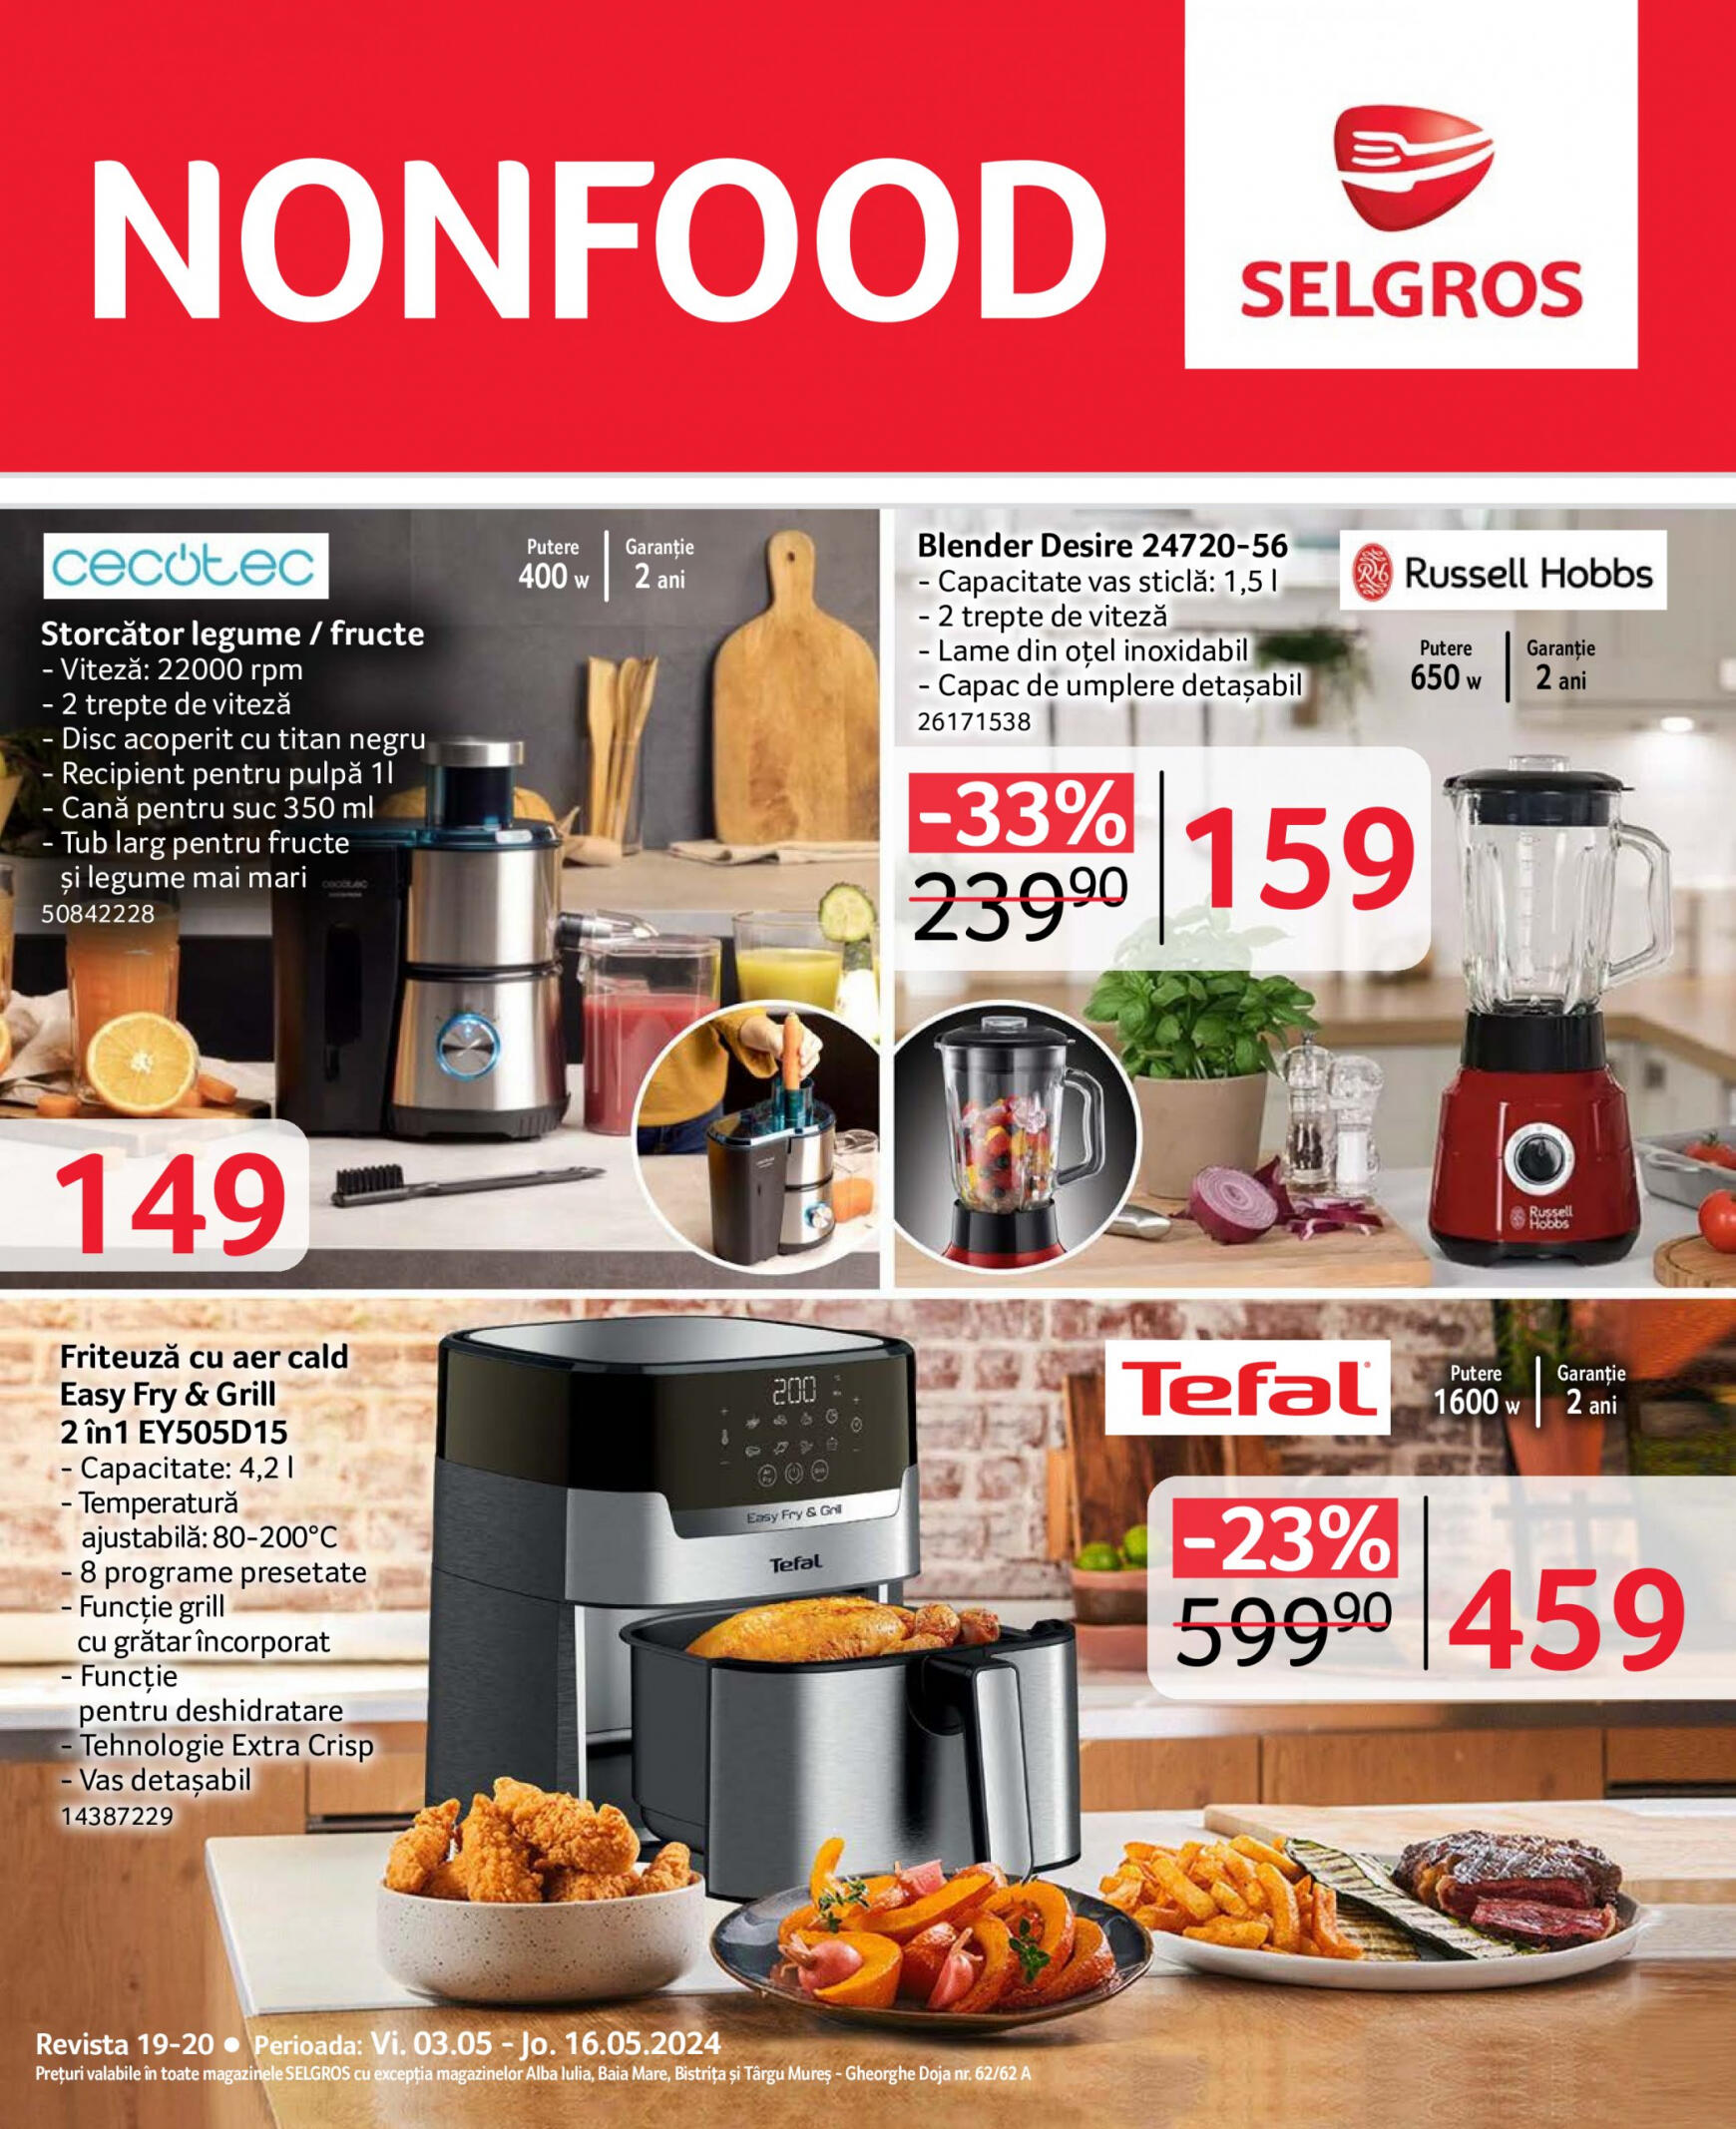 selgros - Catalog nou Selgros - Nonfood 03.05. - 16.05.